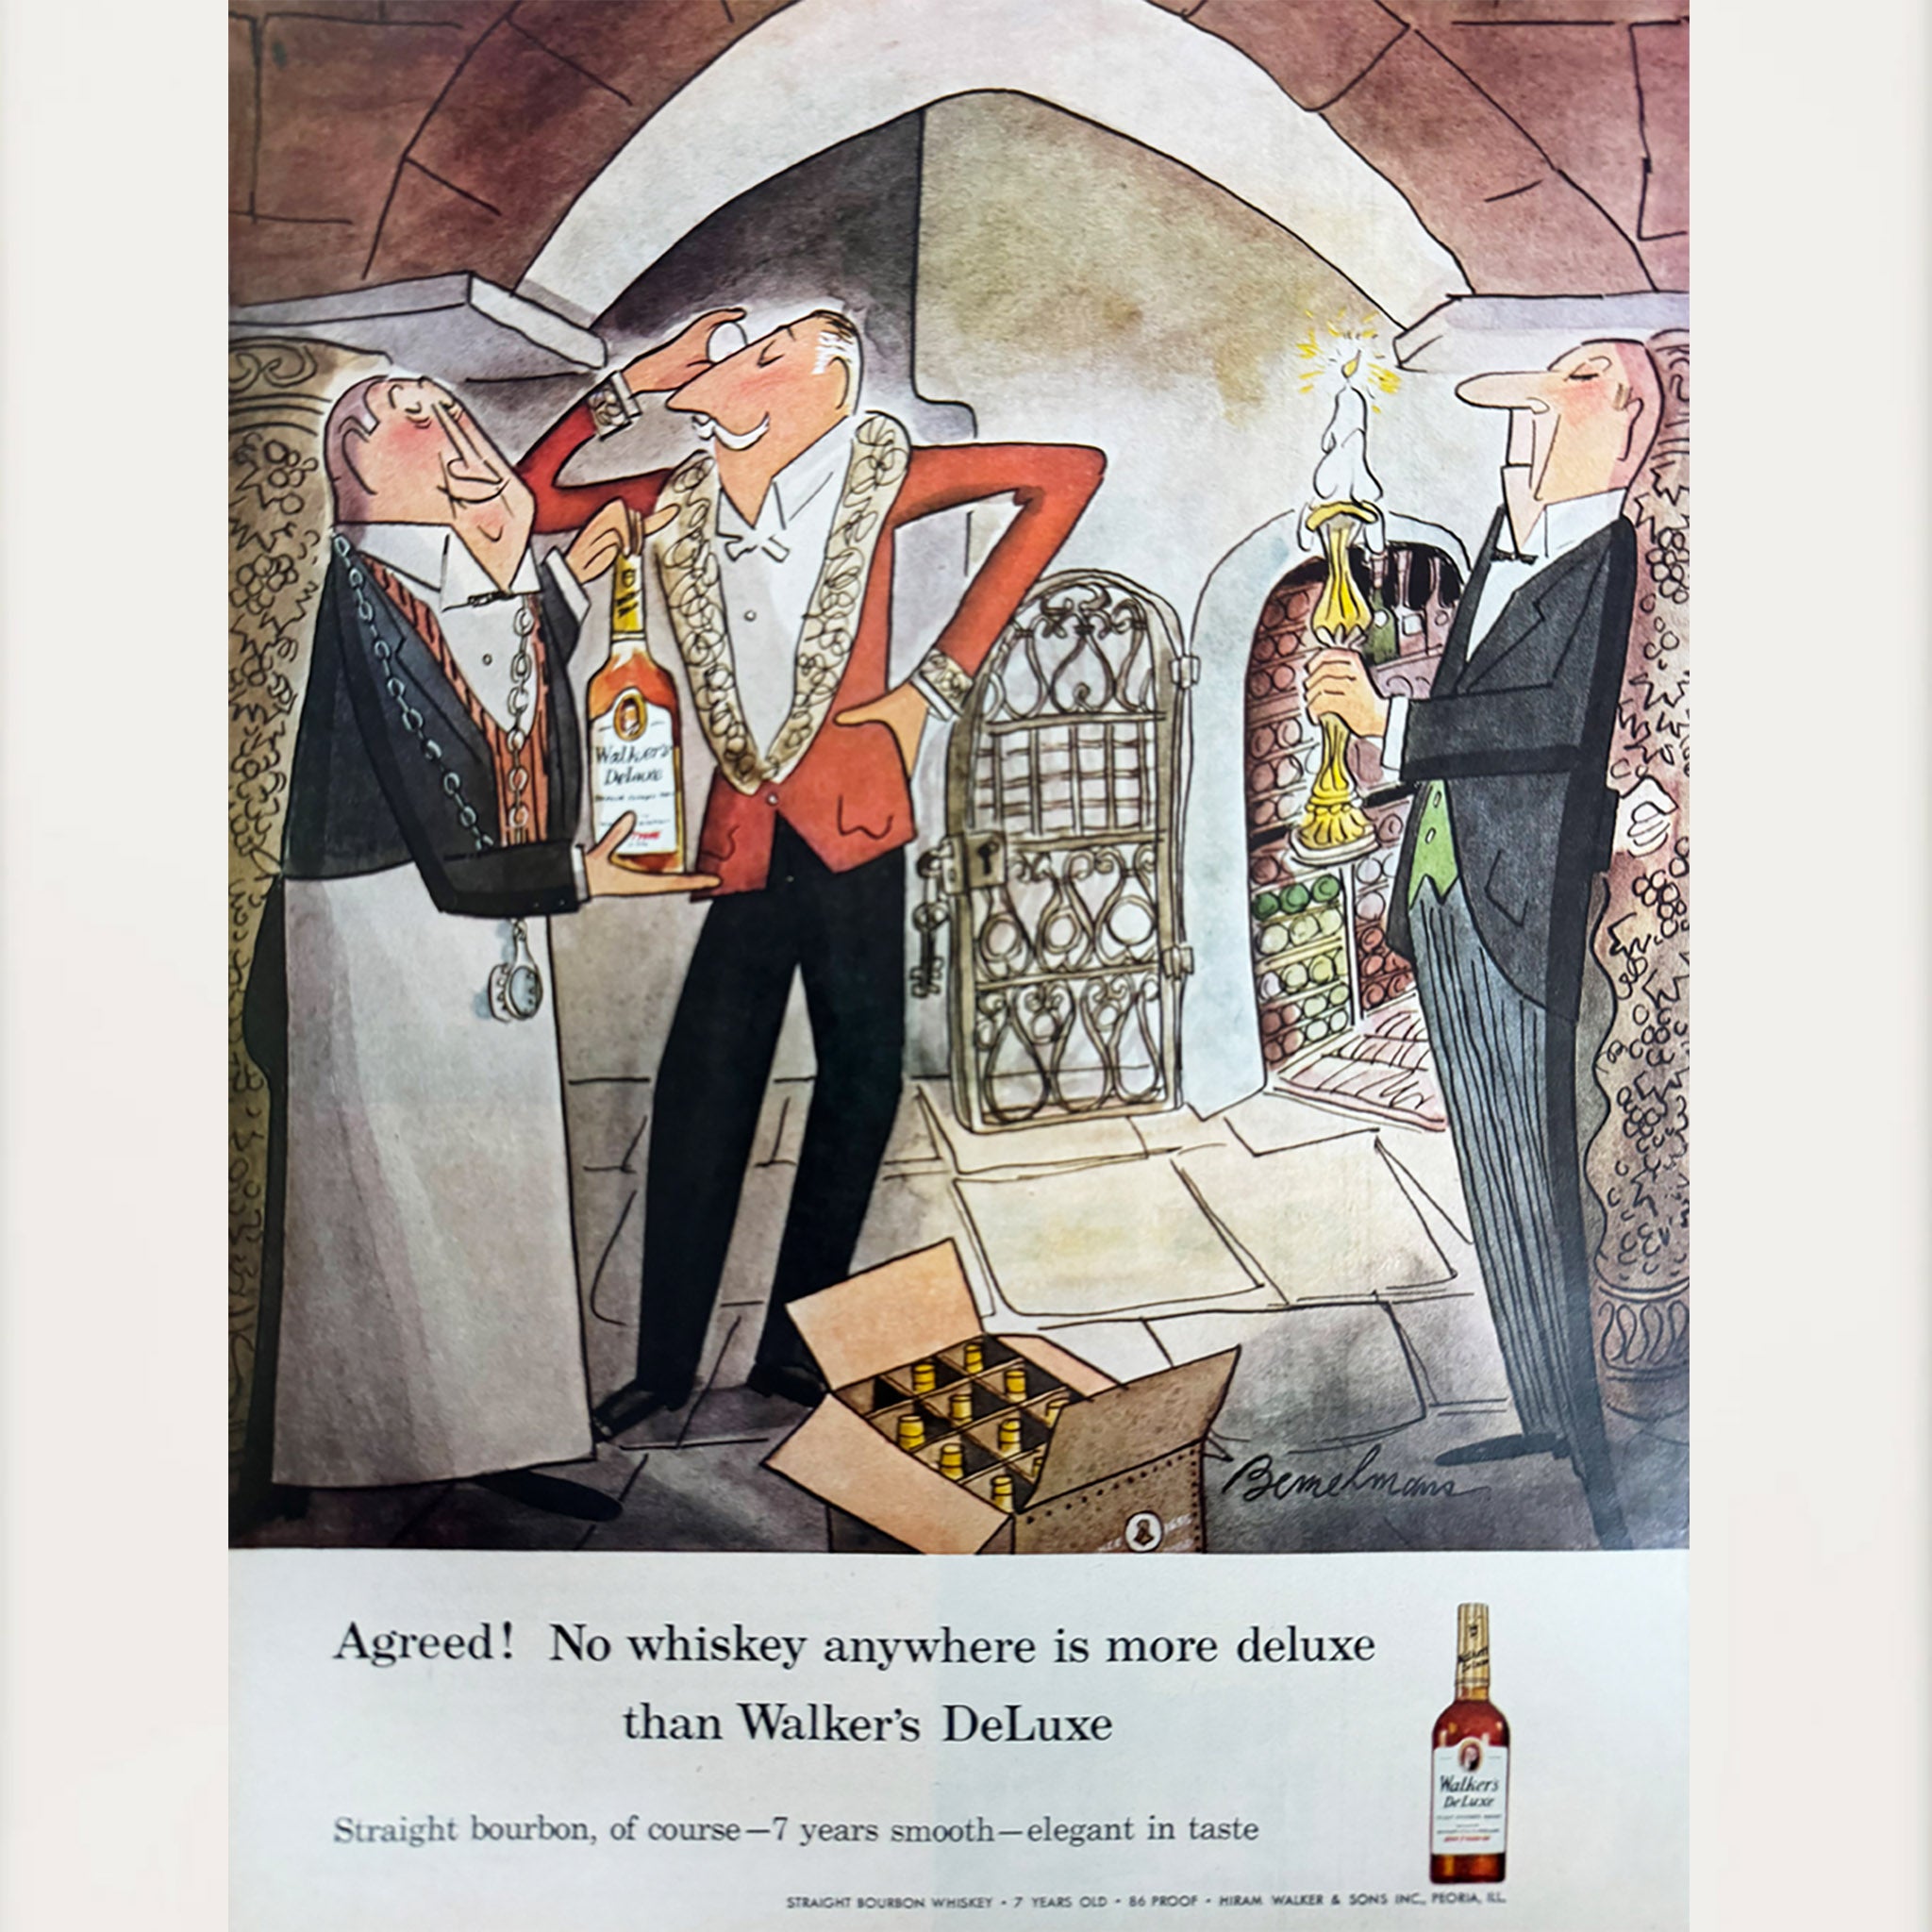 Framed Ludwig Bemelmans Walker's deLuxe Bourbon Wine Cellar Ad